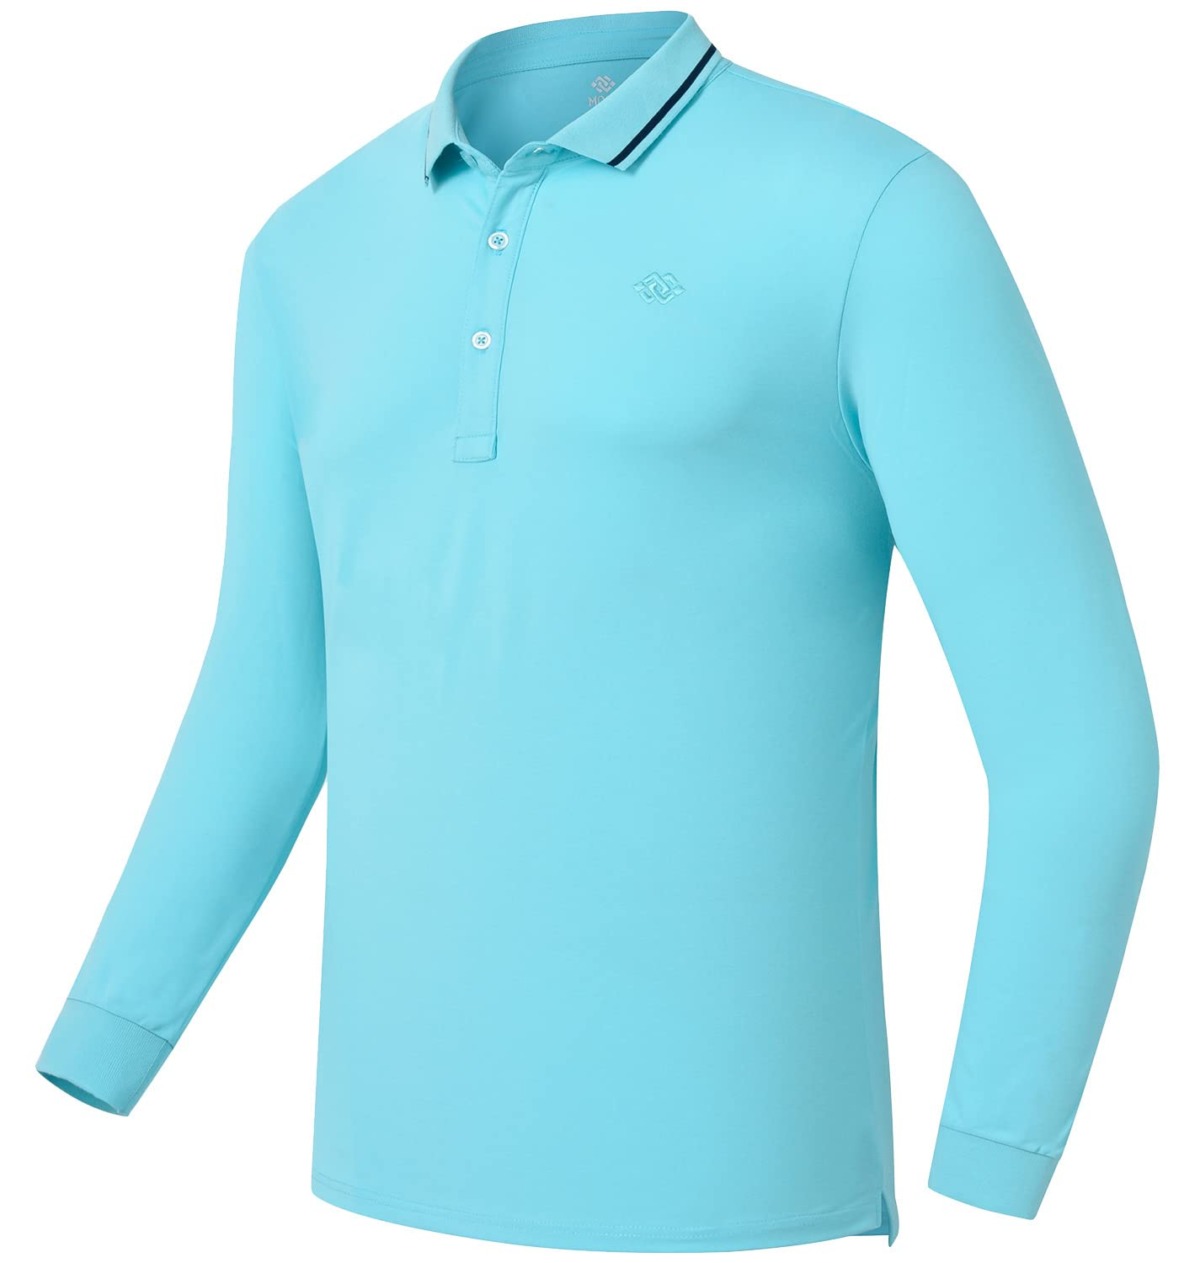 MoFiz Men’s Polo Golf Shirts | The Storepaperoomates Retail Market - Fast Affordable Shopping